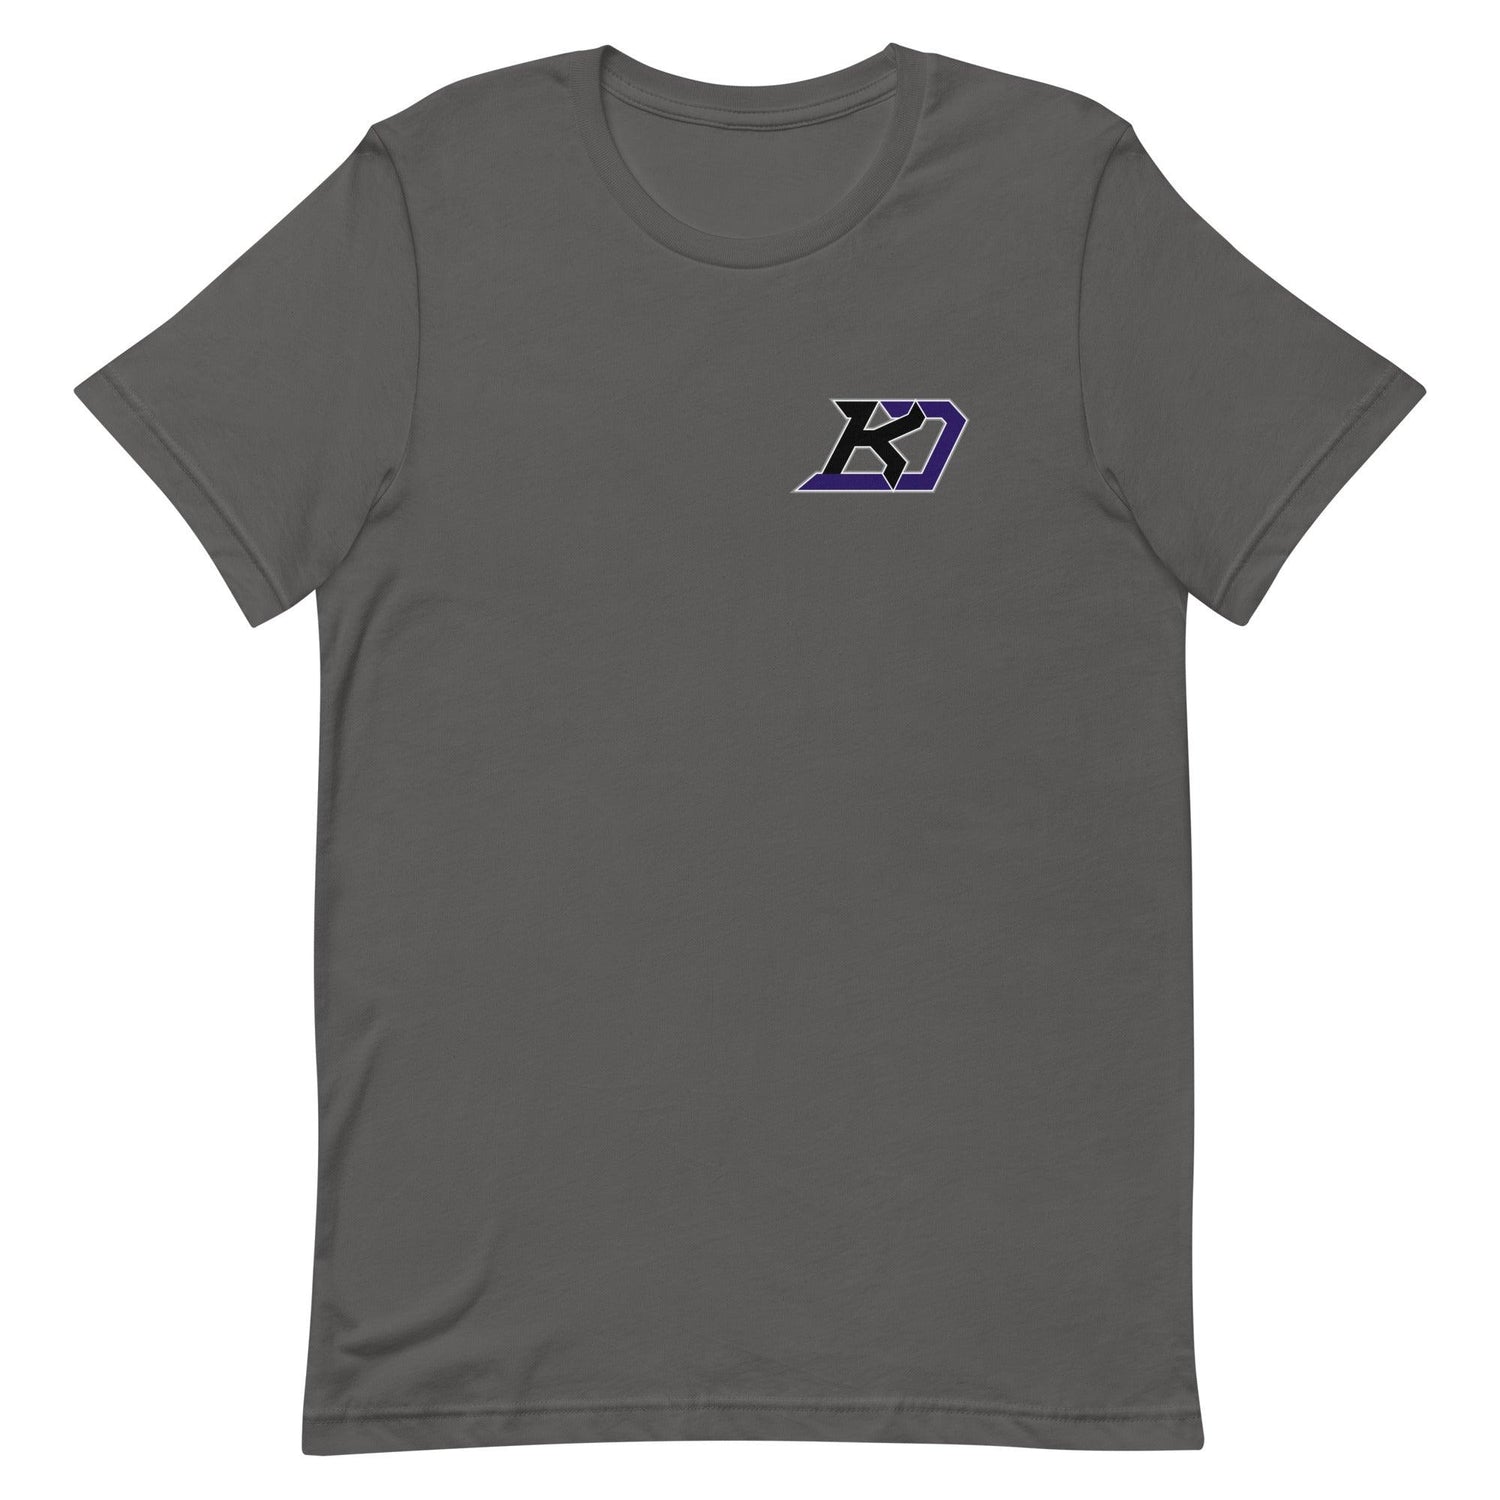 Kyle Datres “Signature” t-shirt - Fan Arch